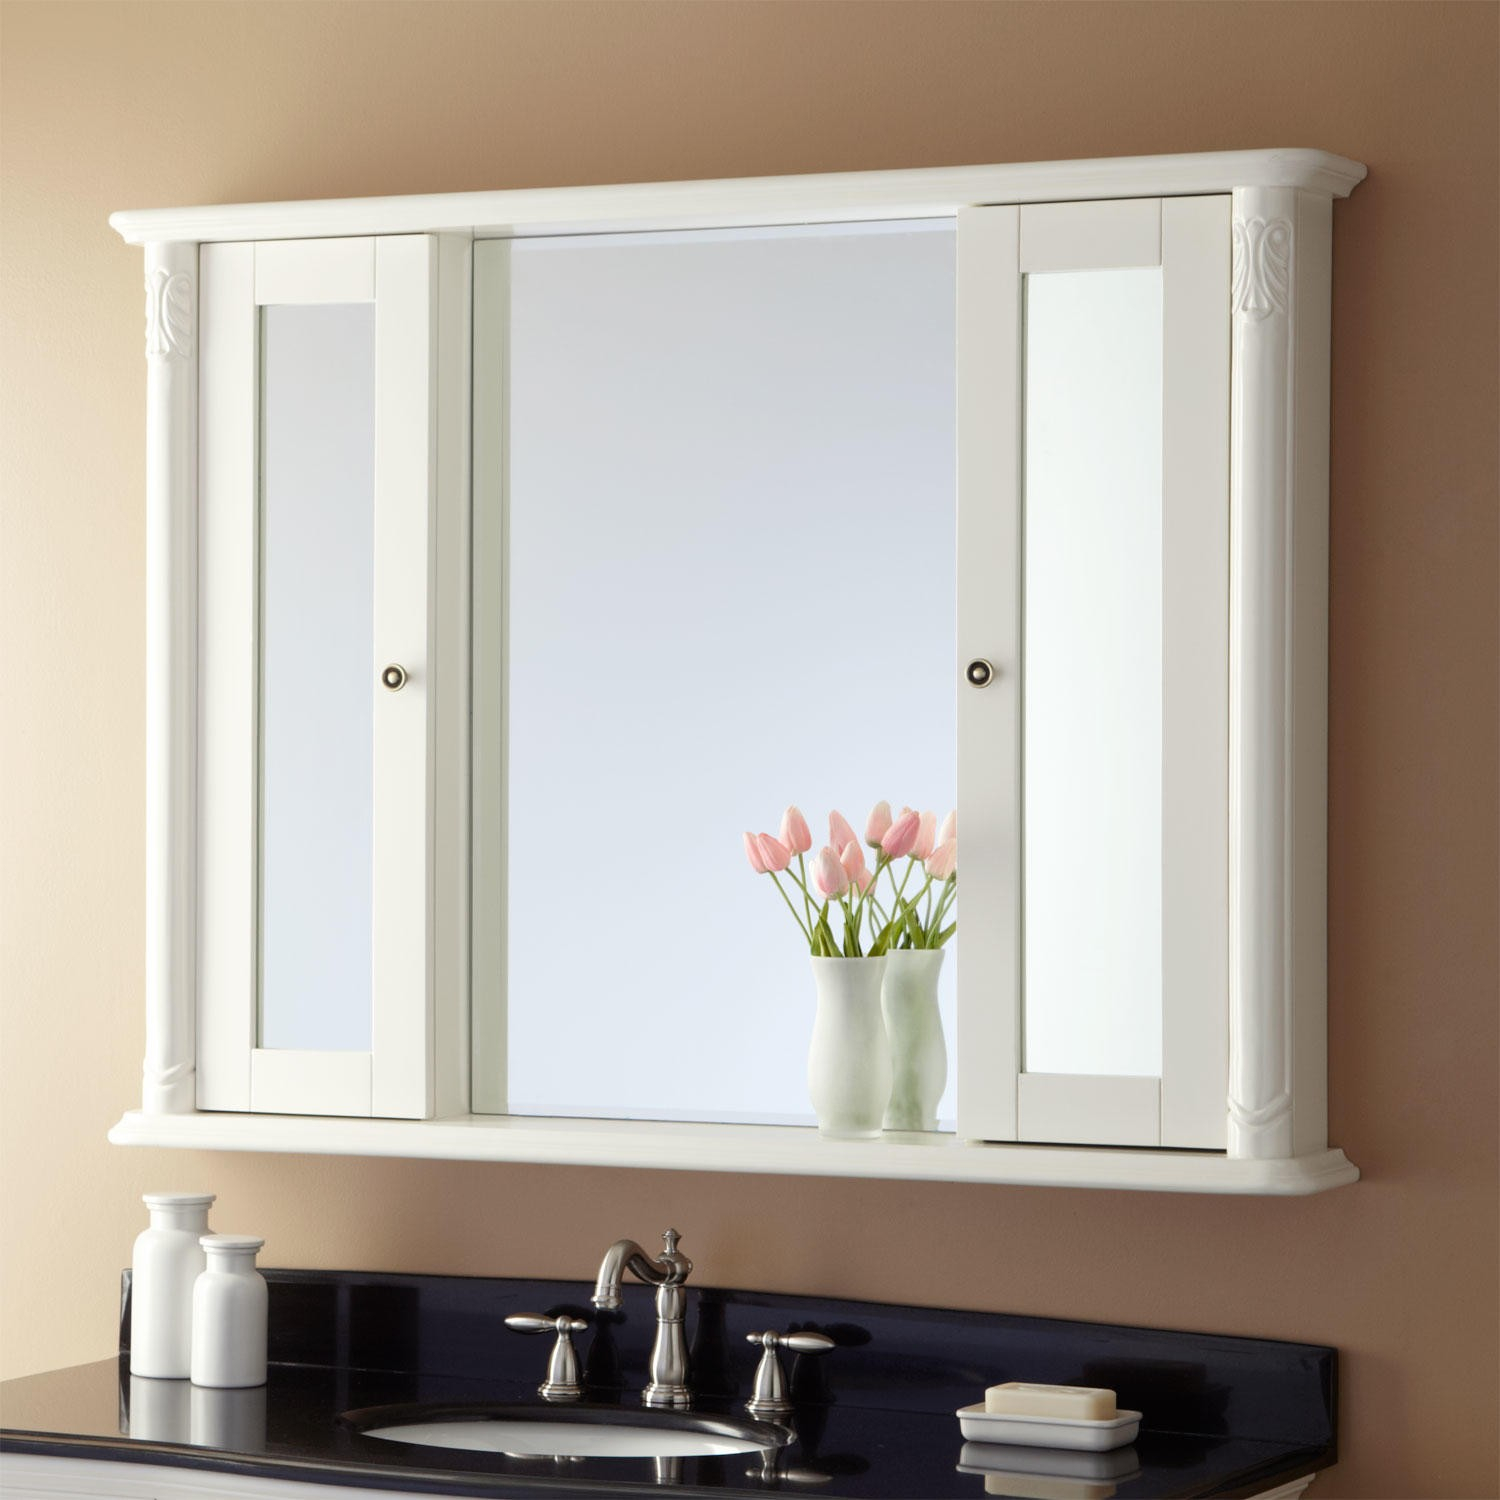 Top Medicine Cabinet Mirror Mirror Ideas Design For Decorate with dimensions 1500 X 1500